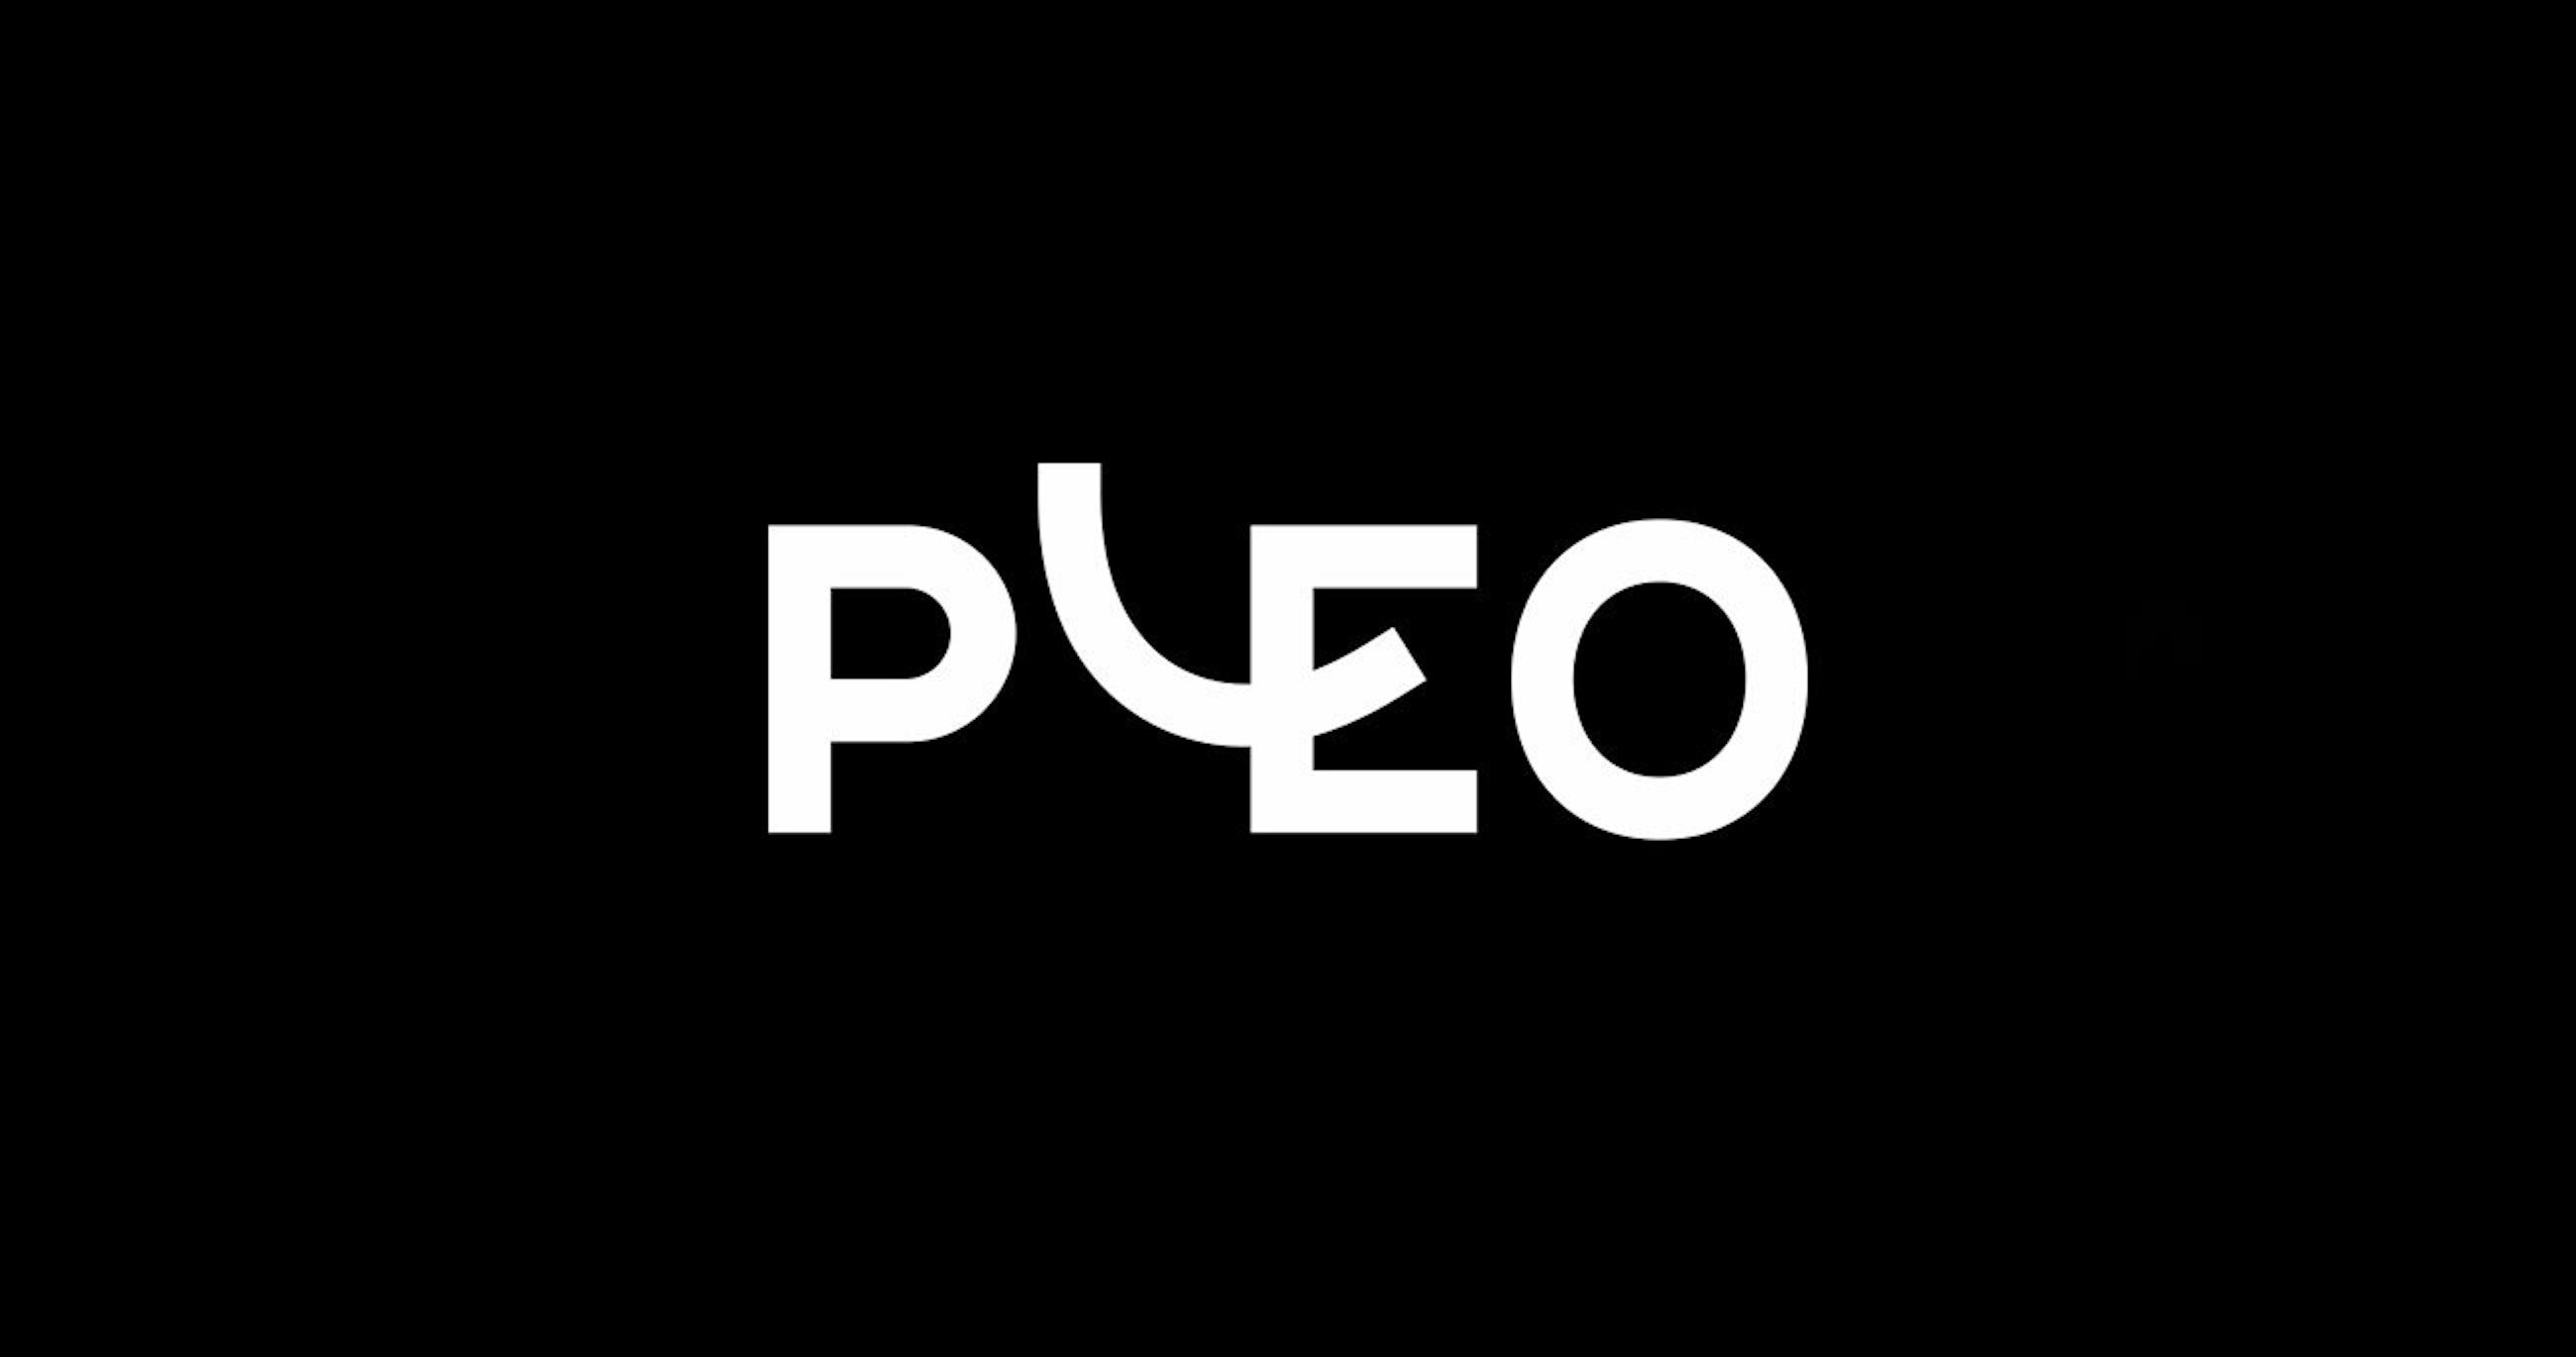 About Us: The Pleo story so far - Pleo